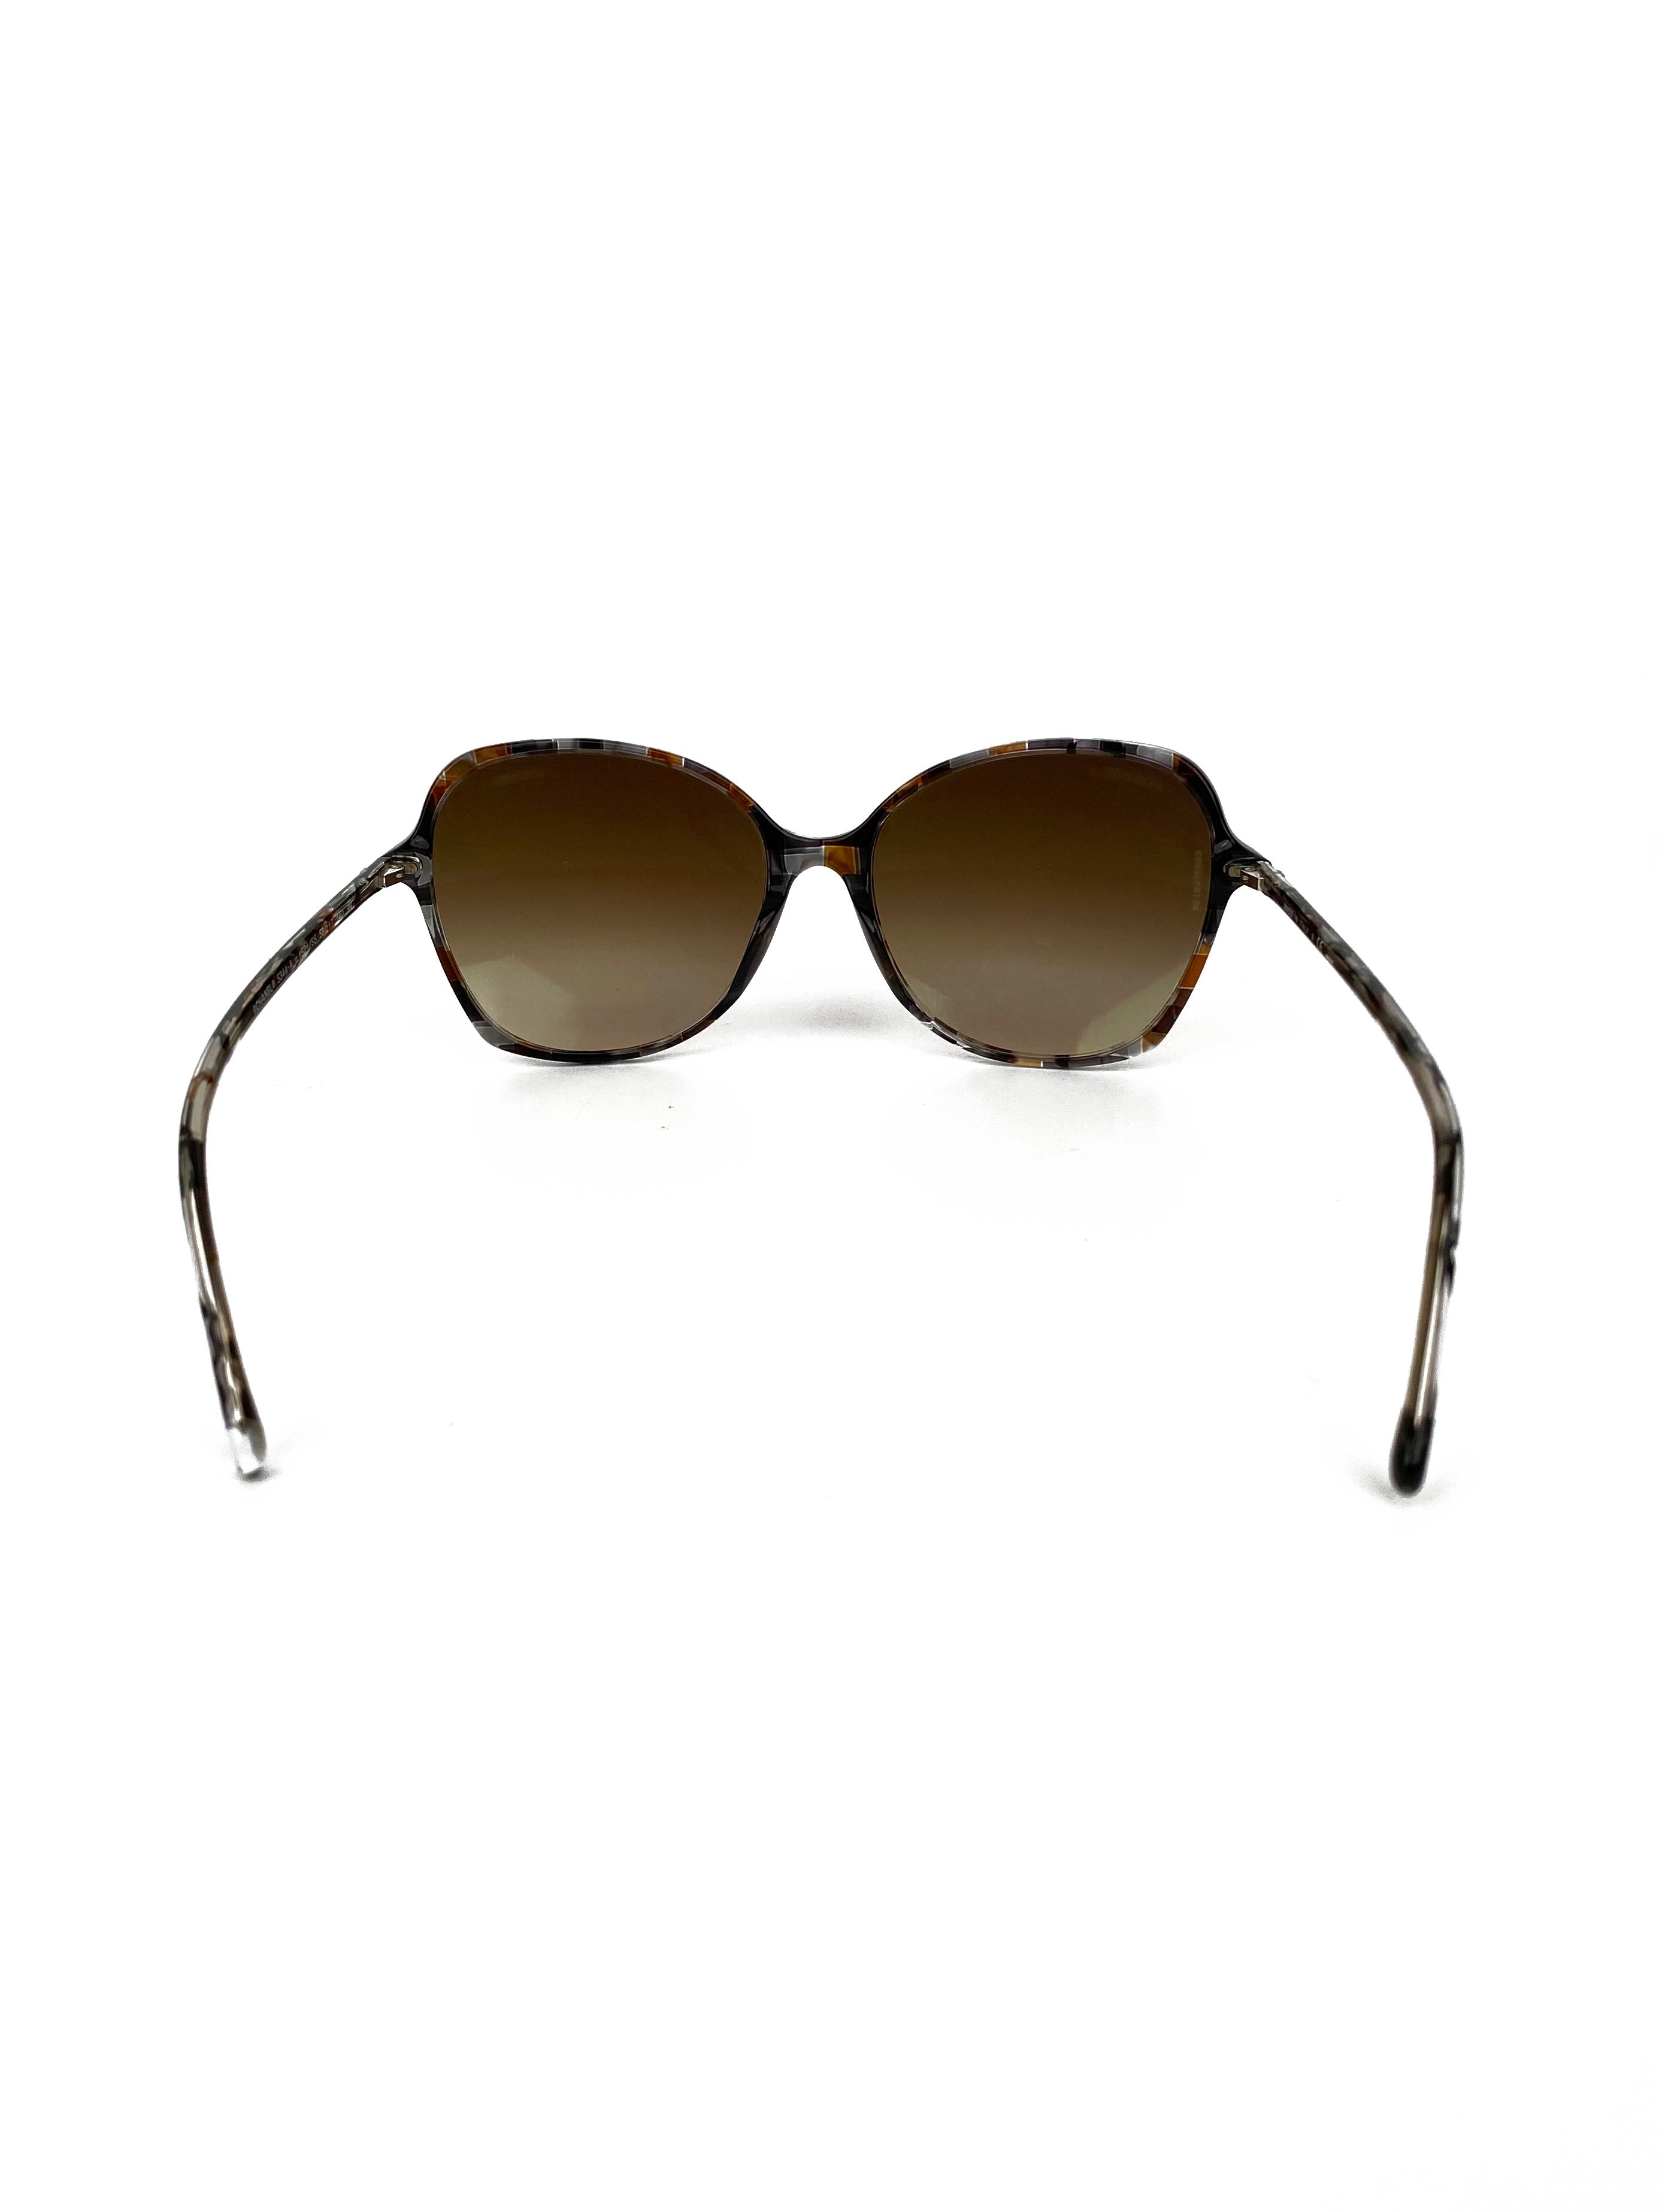 Chanel CC Tortoiseshell Sunglasses 5344A